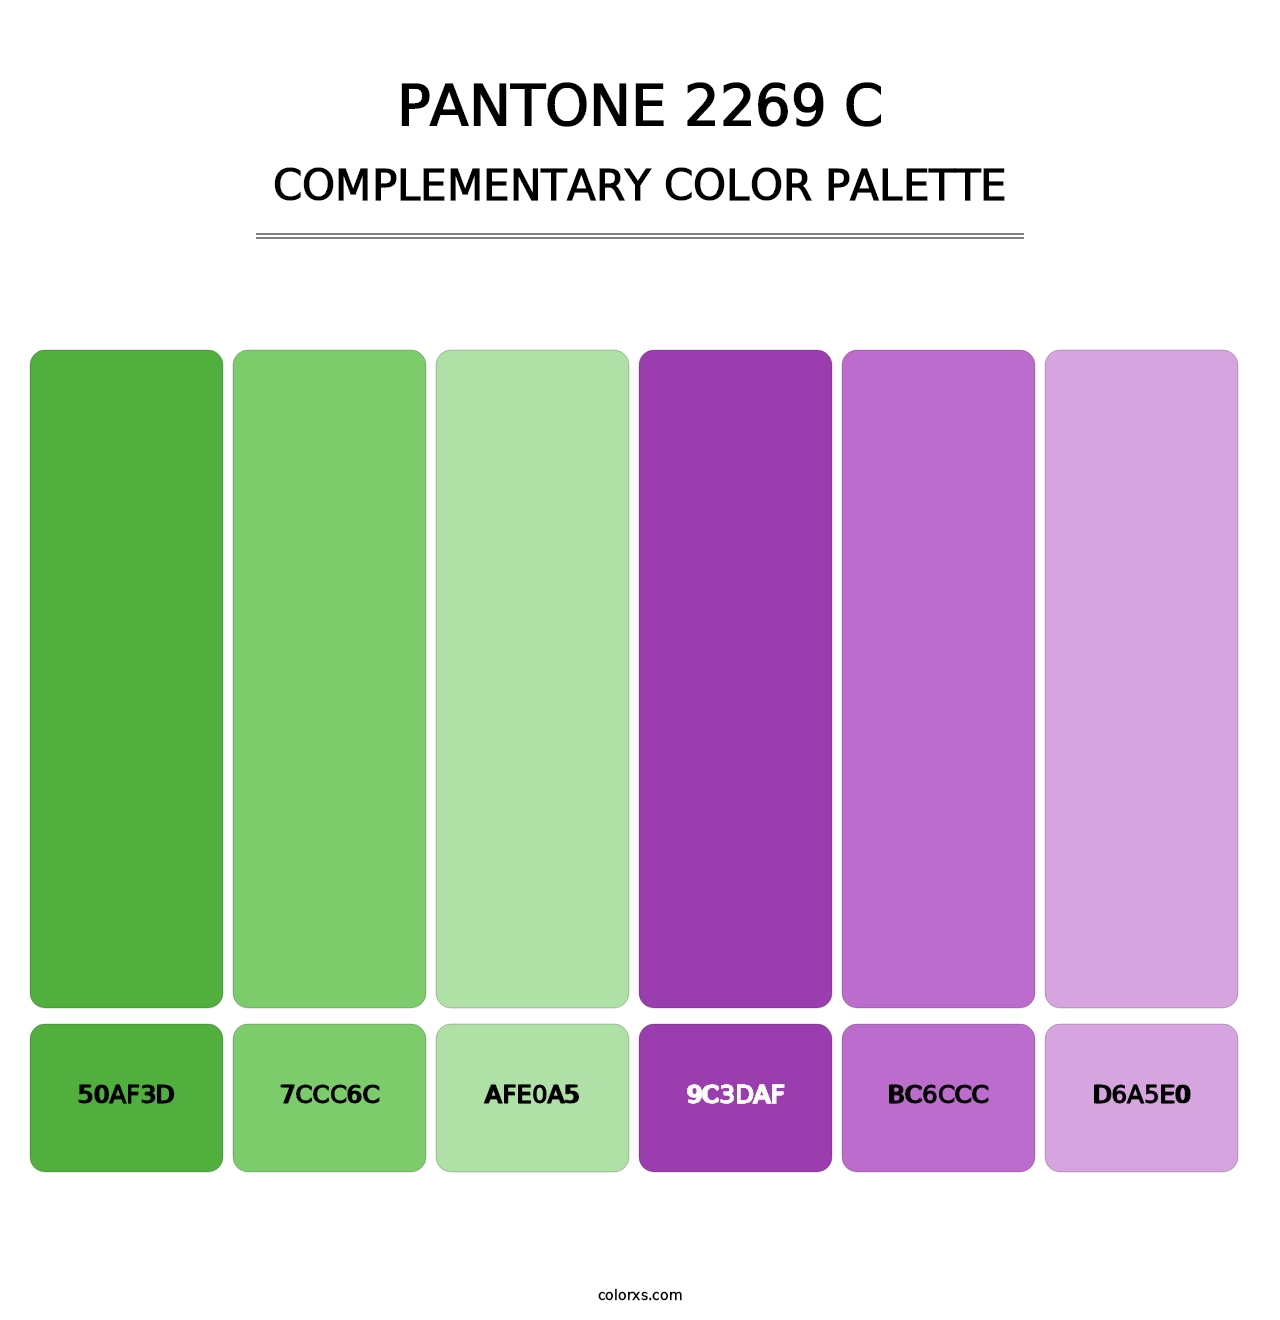 PANTONE 2269 C - Complementary Color Palette